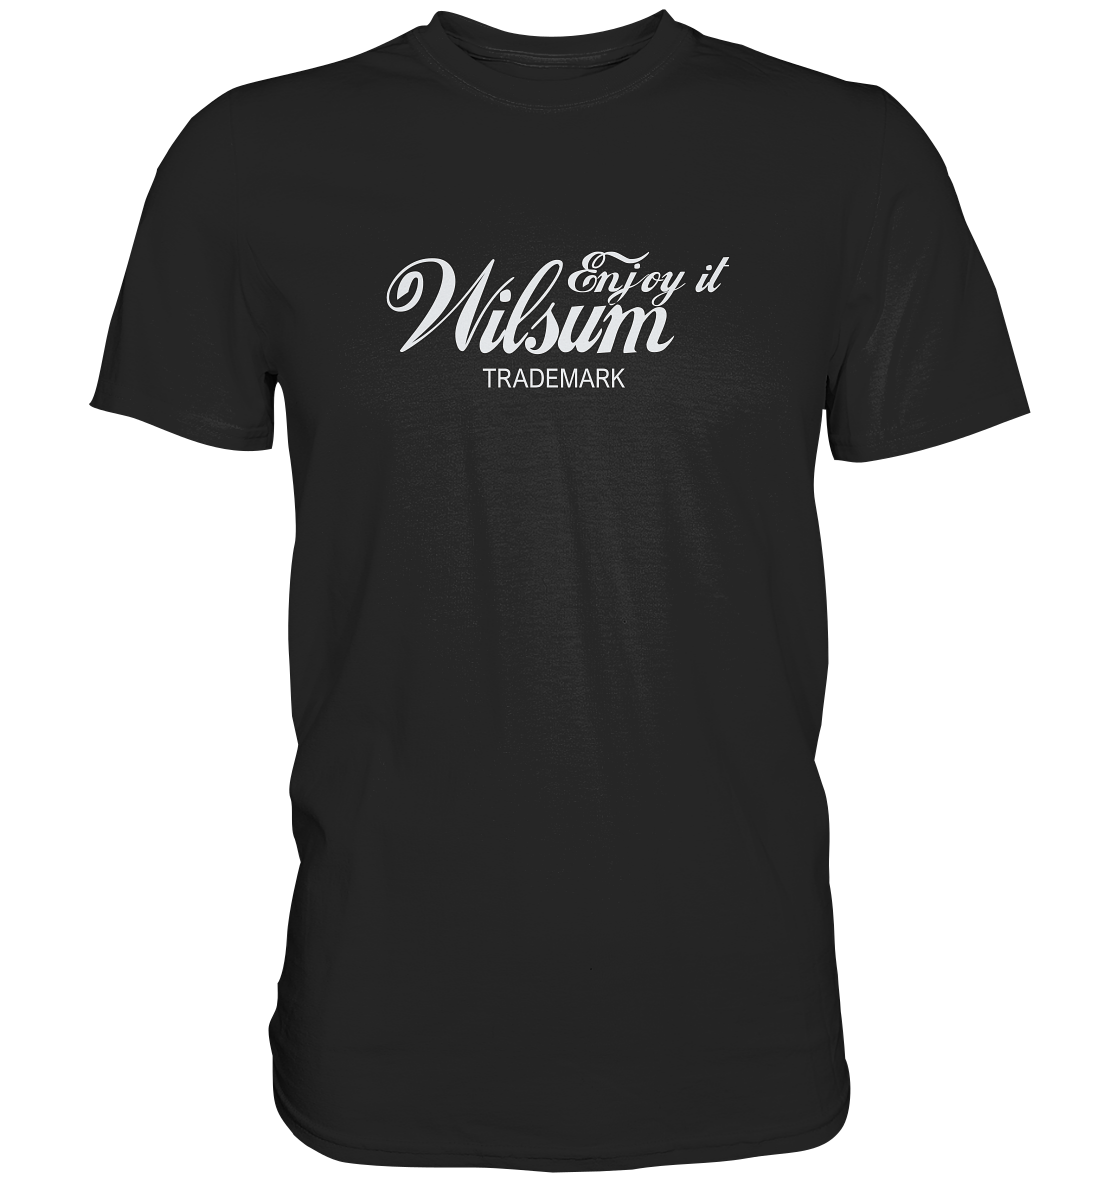 "Enjoy it - Wilsum" - Premium Shirt